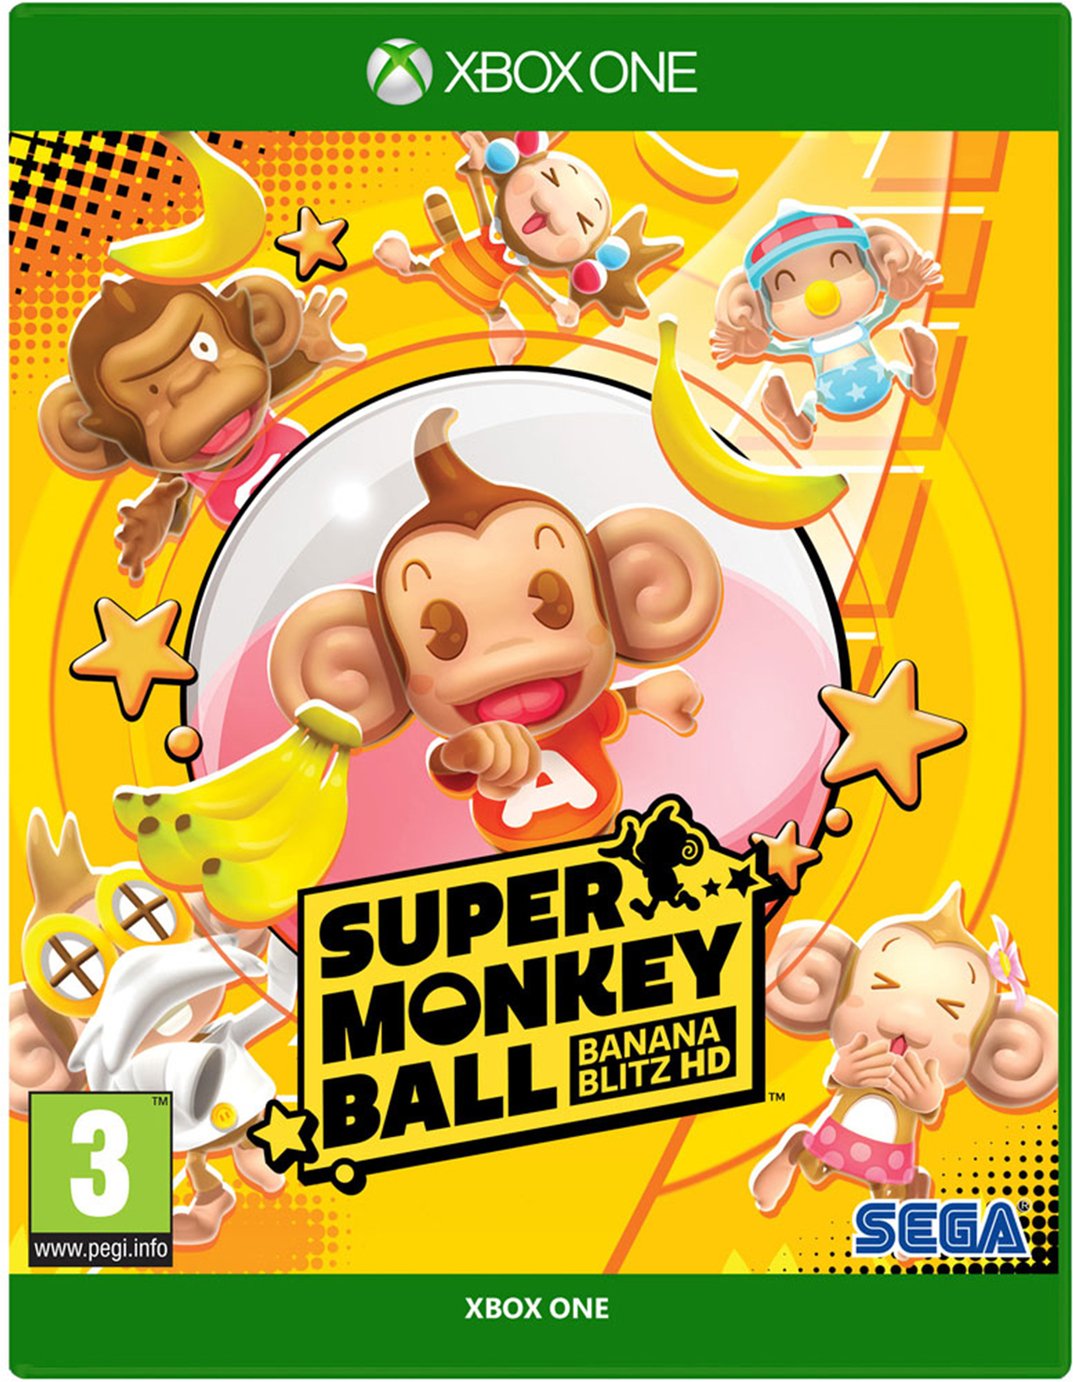 Super Monkey Ball Banana Blitz HD Xbox One Game